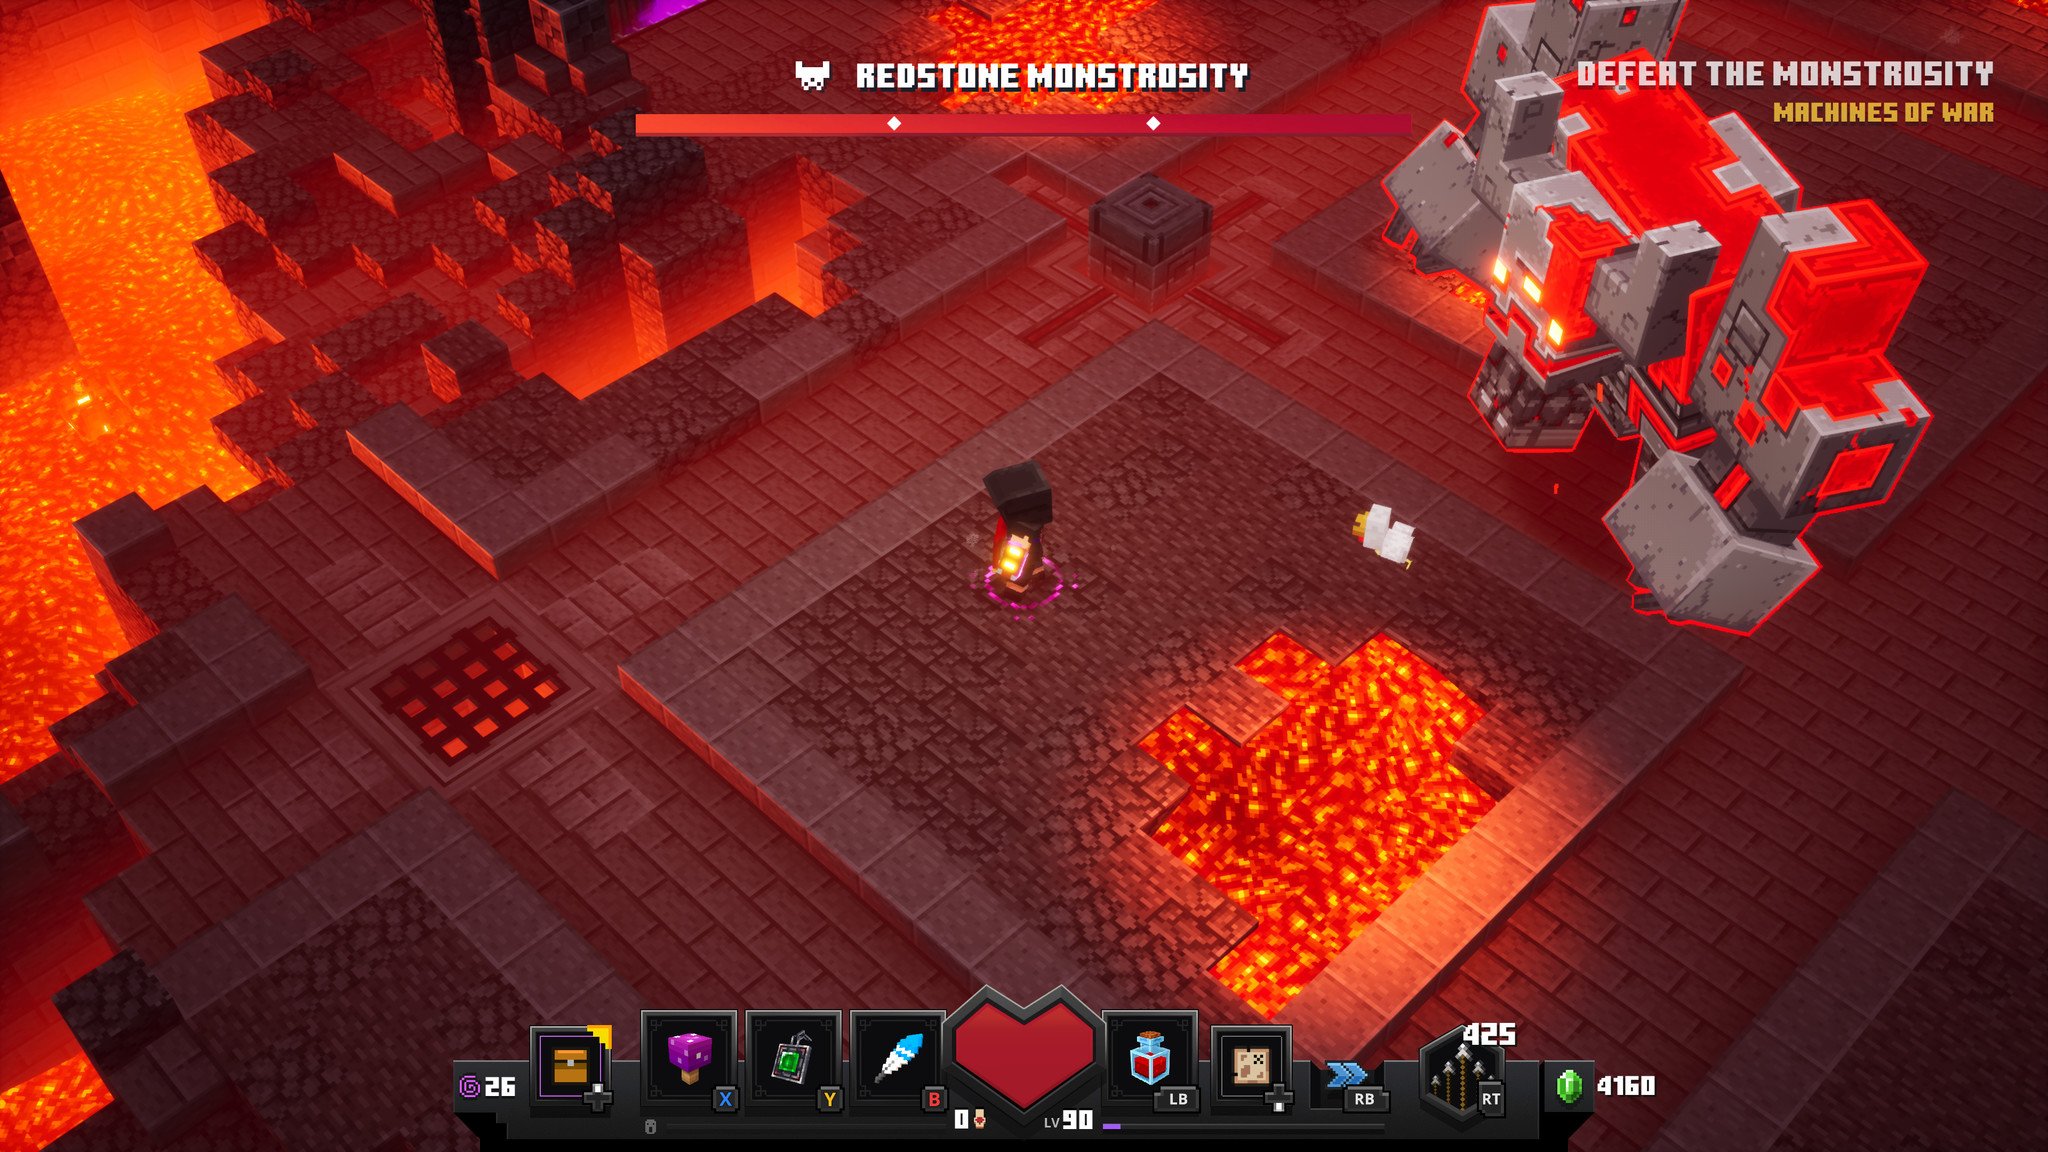 minecraft-dungeons-boss-redstone-monstrosity-08.jpg